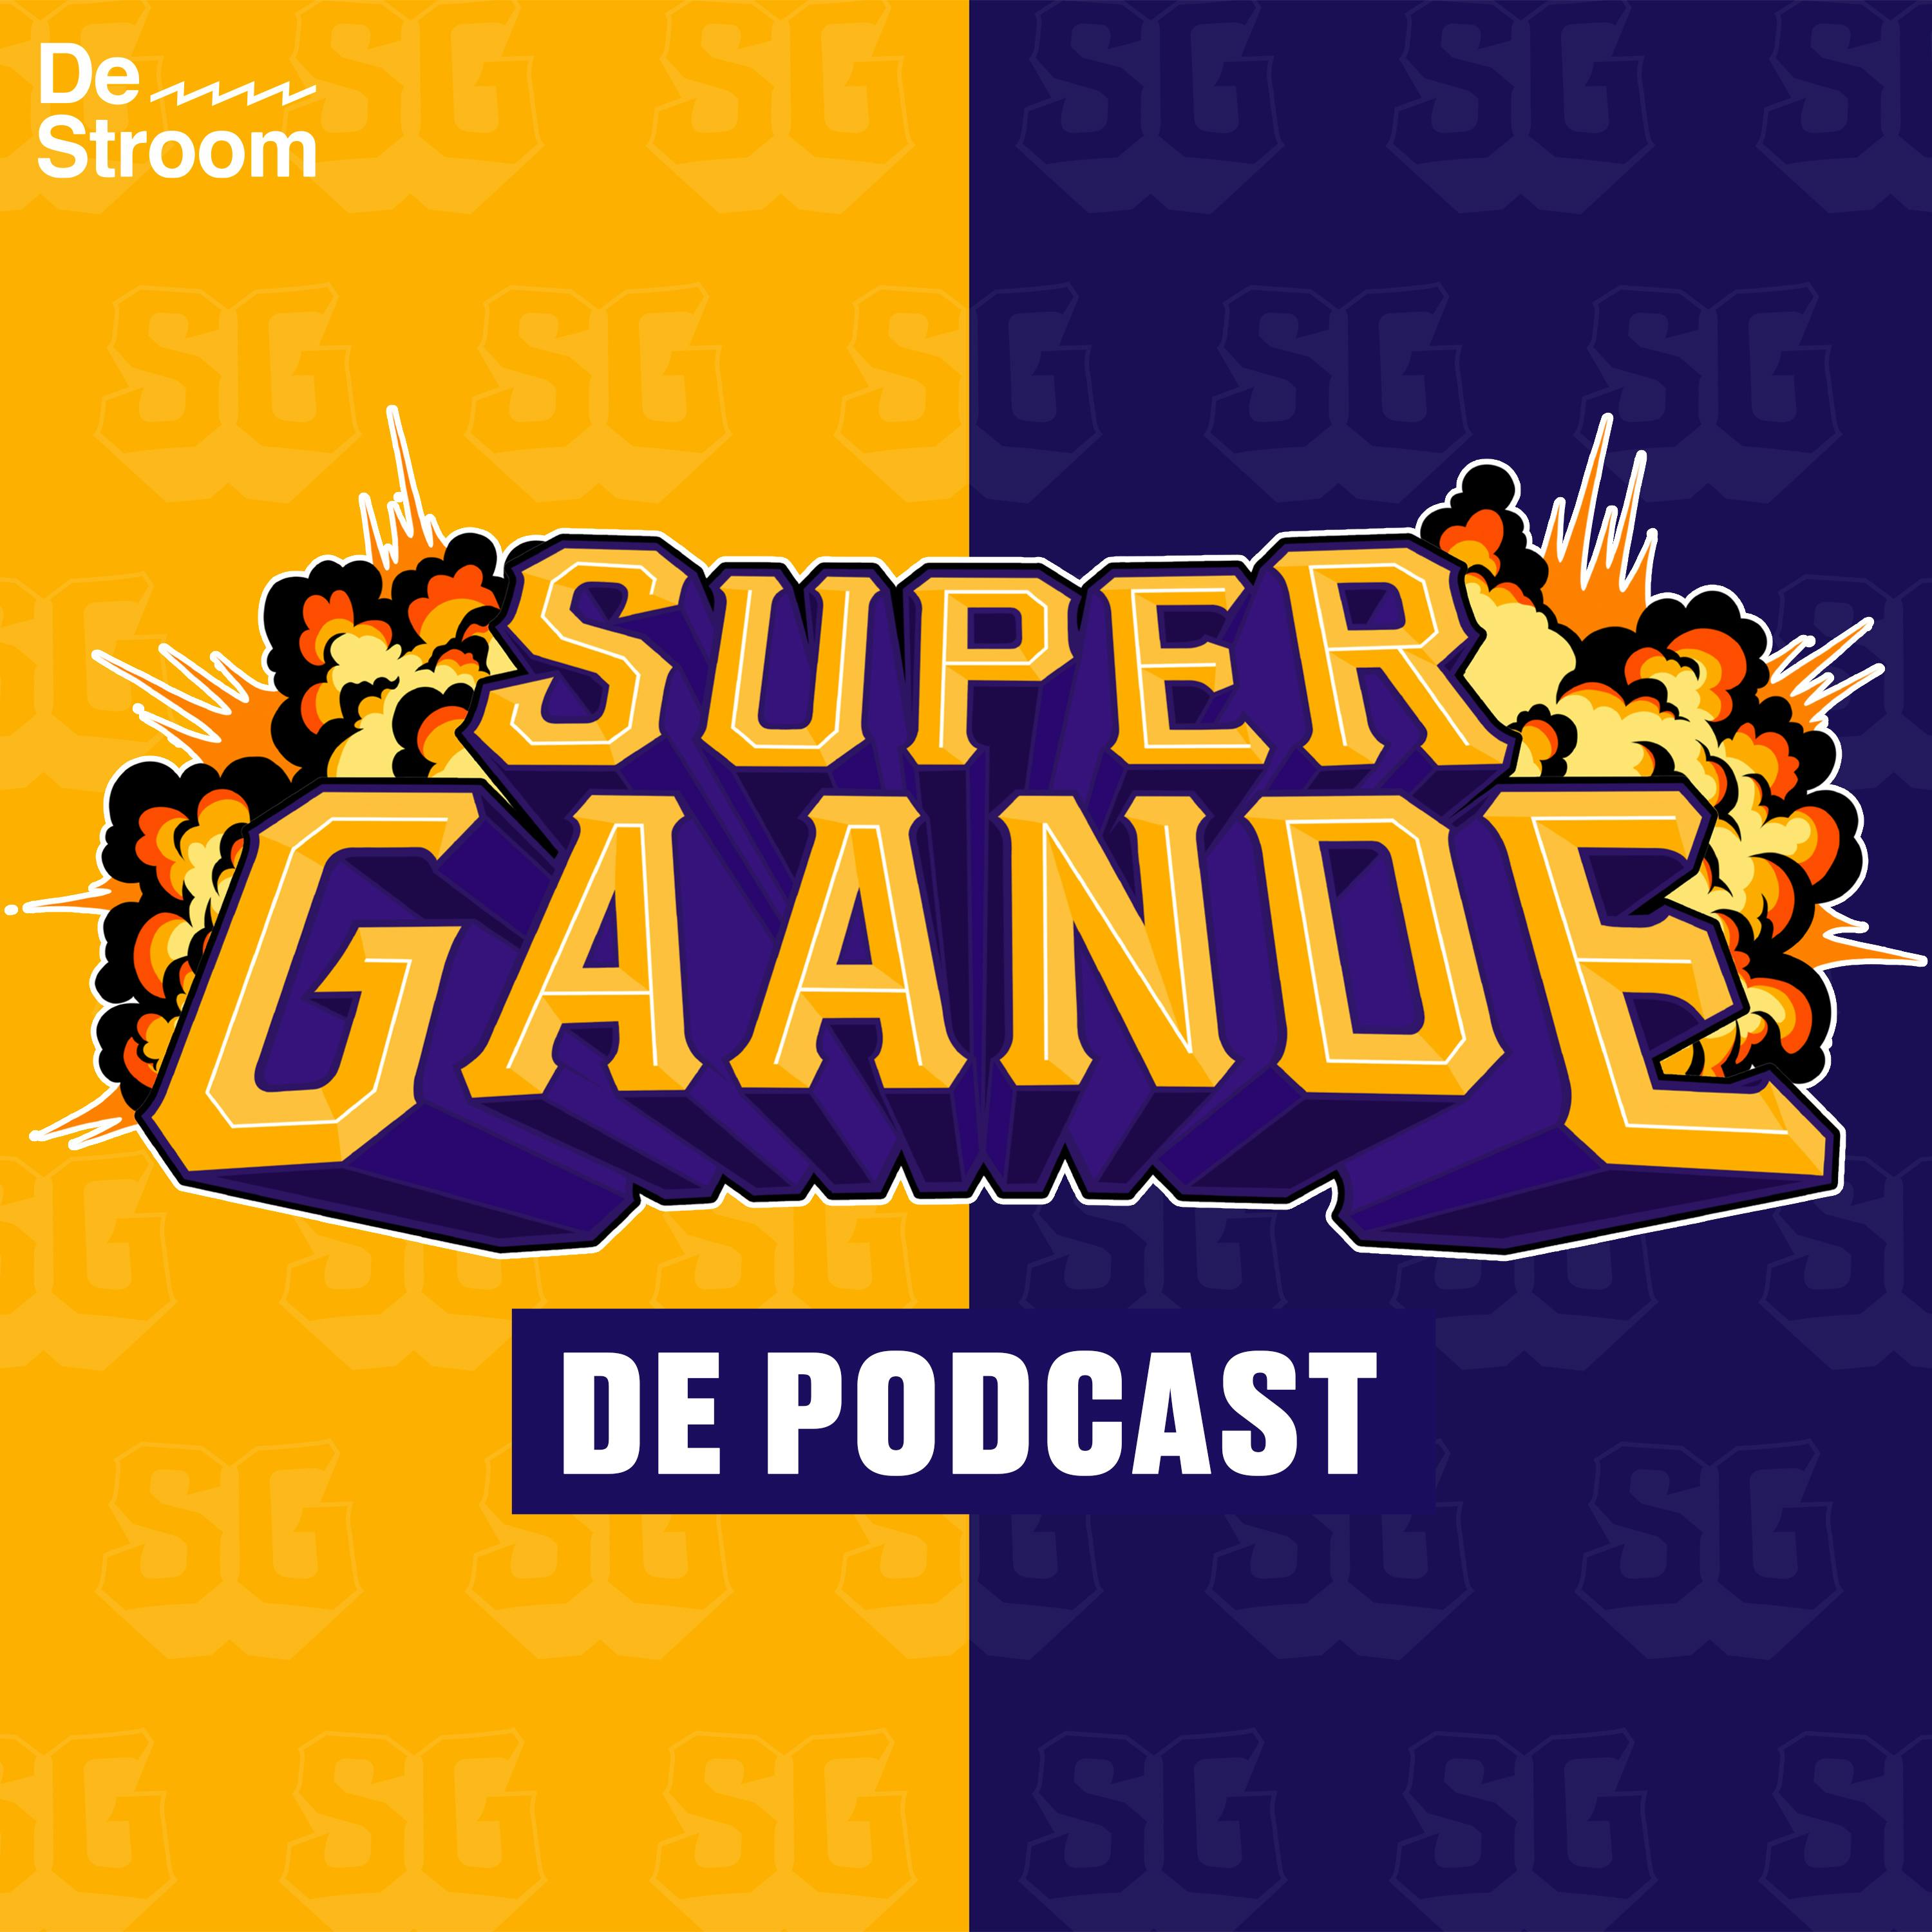 De Supergaande Podcast logo